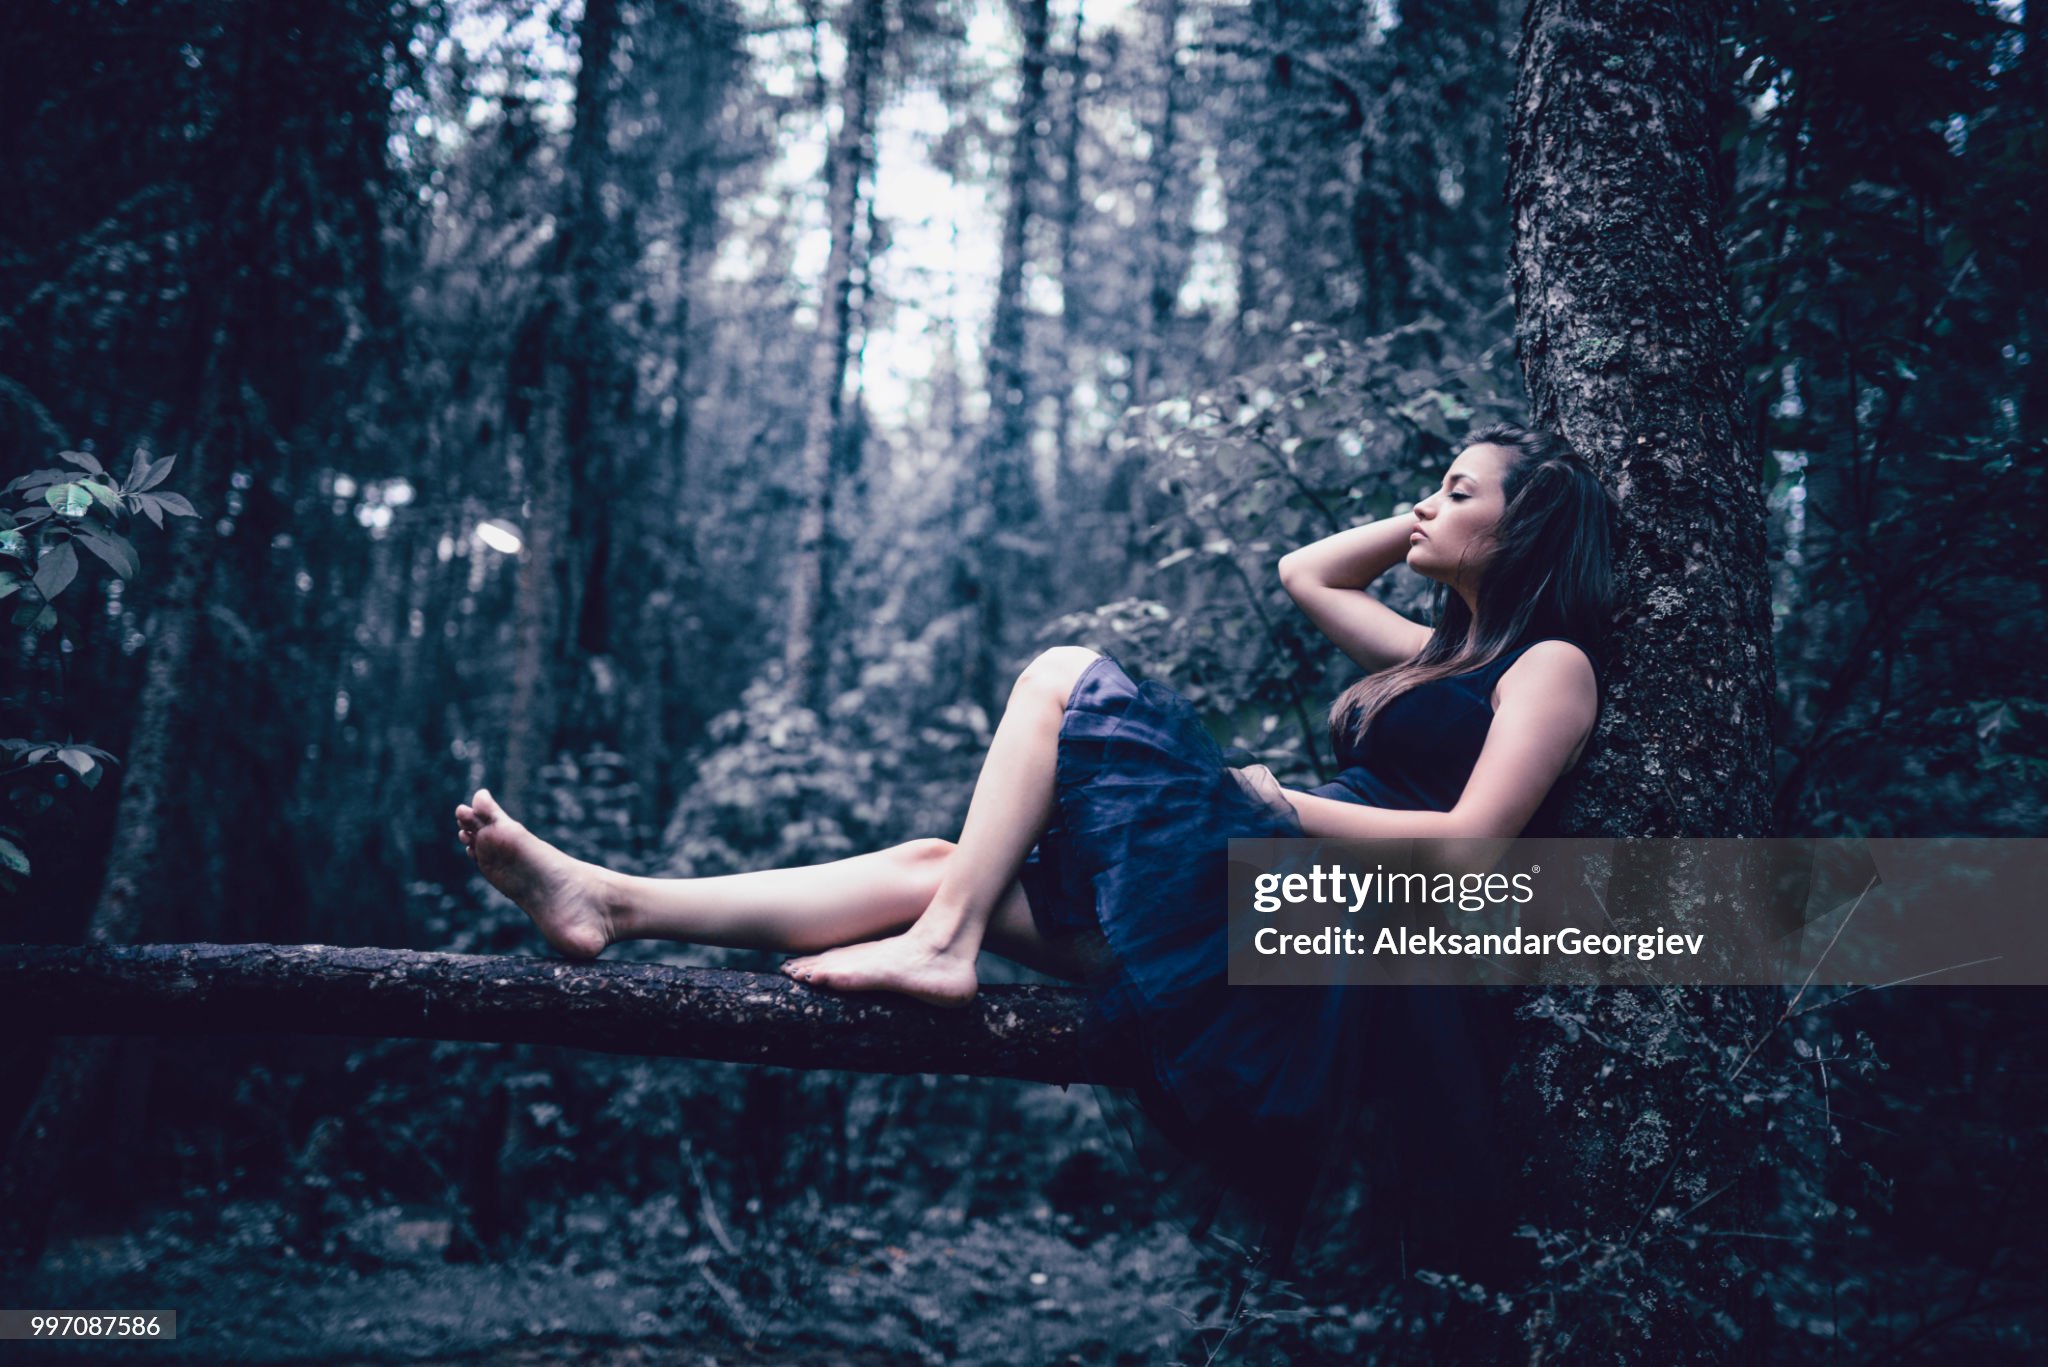 https://media.gettyimages.com/id/997087586/photo/cute-barefoot-female-sitting-on-branch-in-rainforest.jpg?s=2048x2048&amp;w=gi&amp;k=20&amp;c=hfoZ2zUNrlPlxCn_zbNybPwKePRv3SithADRL-1jphY=